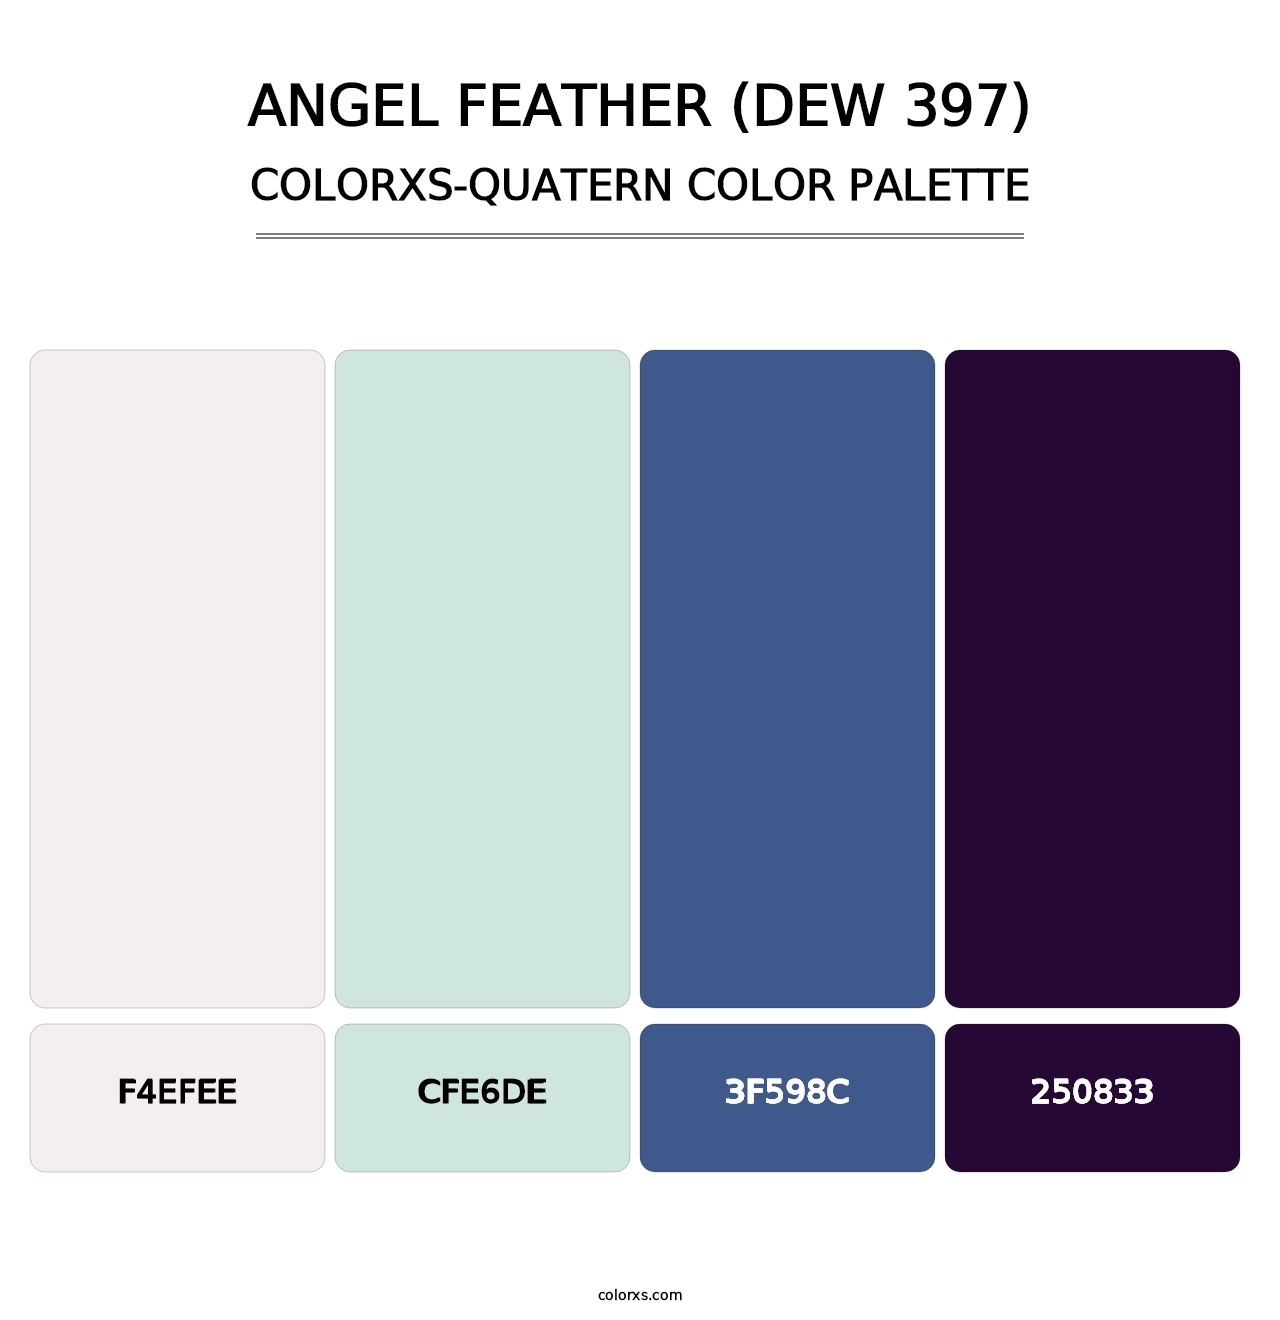 Angel Feather (DEW 397) - Colorxs Quatern Palette